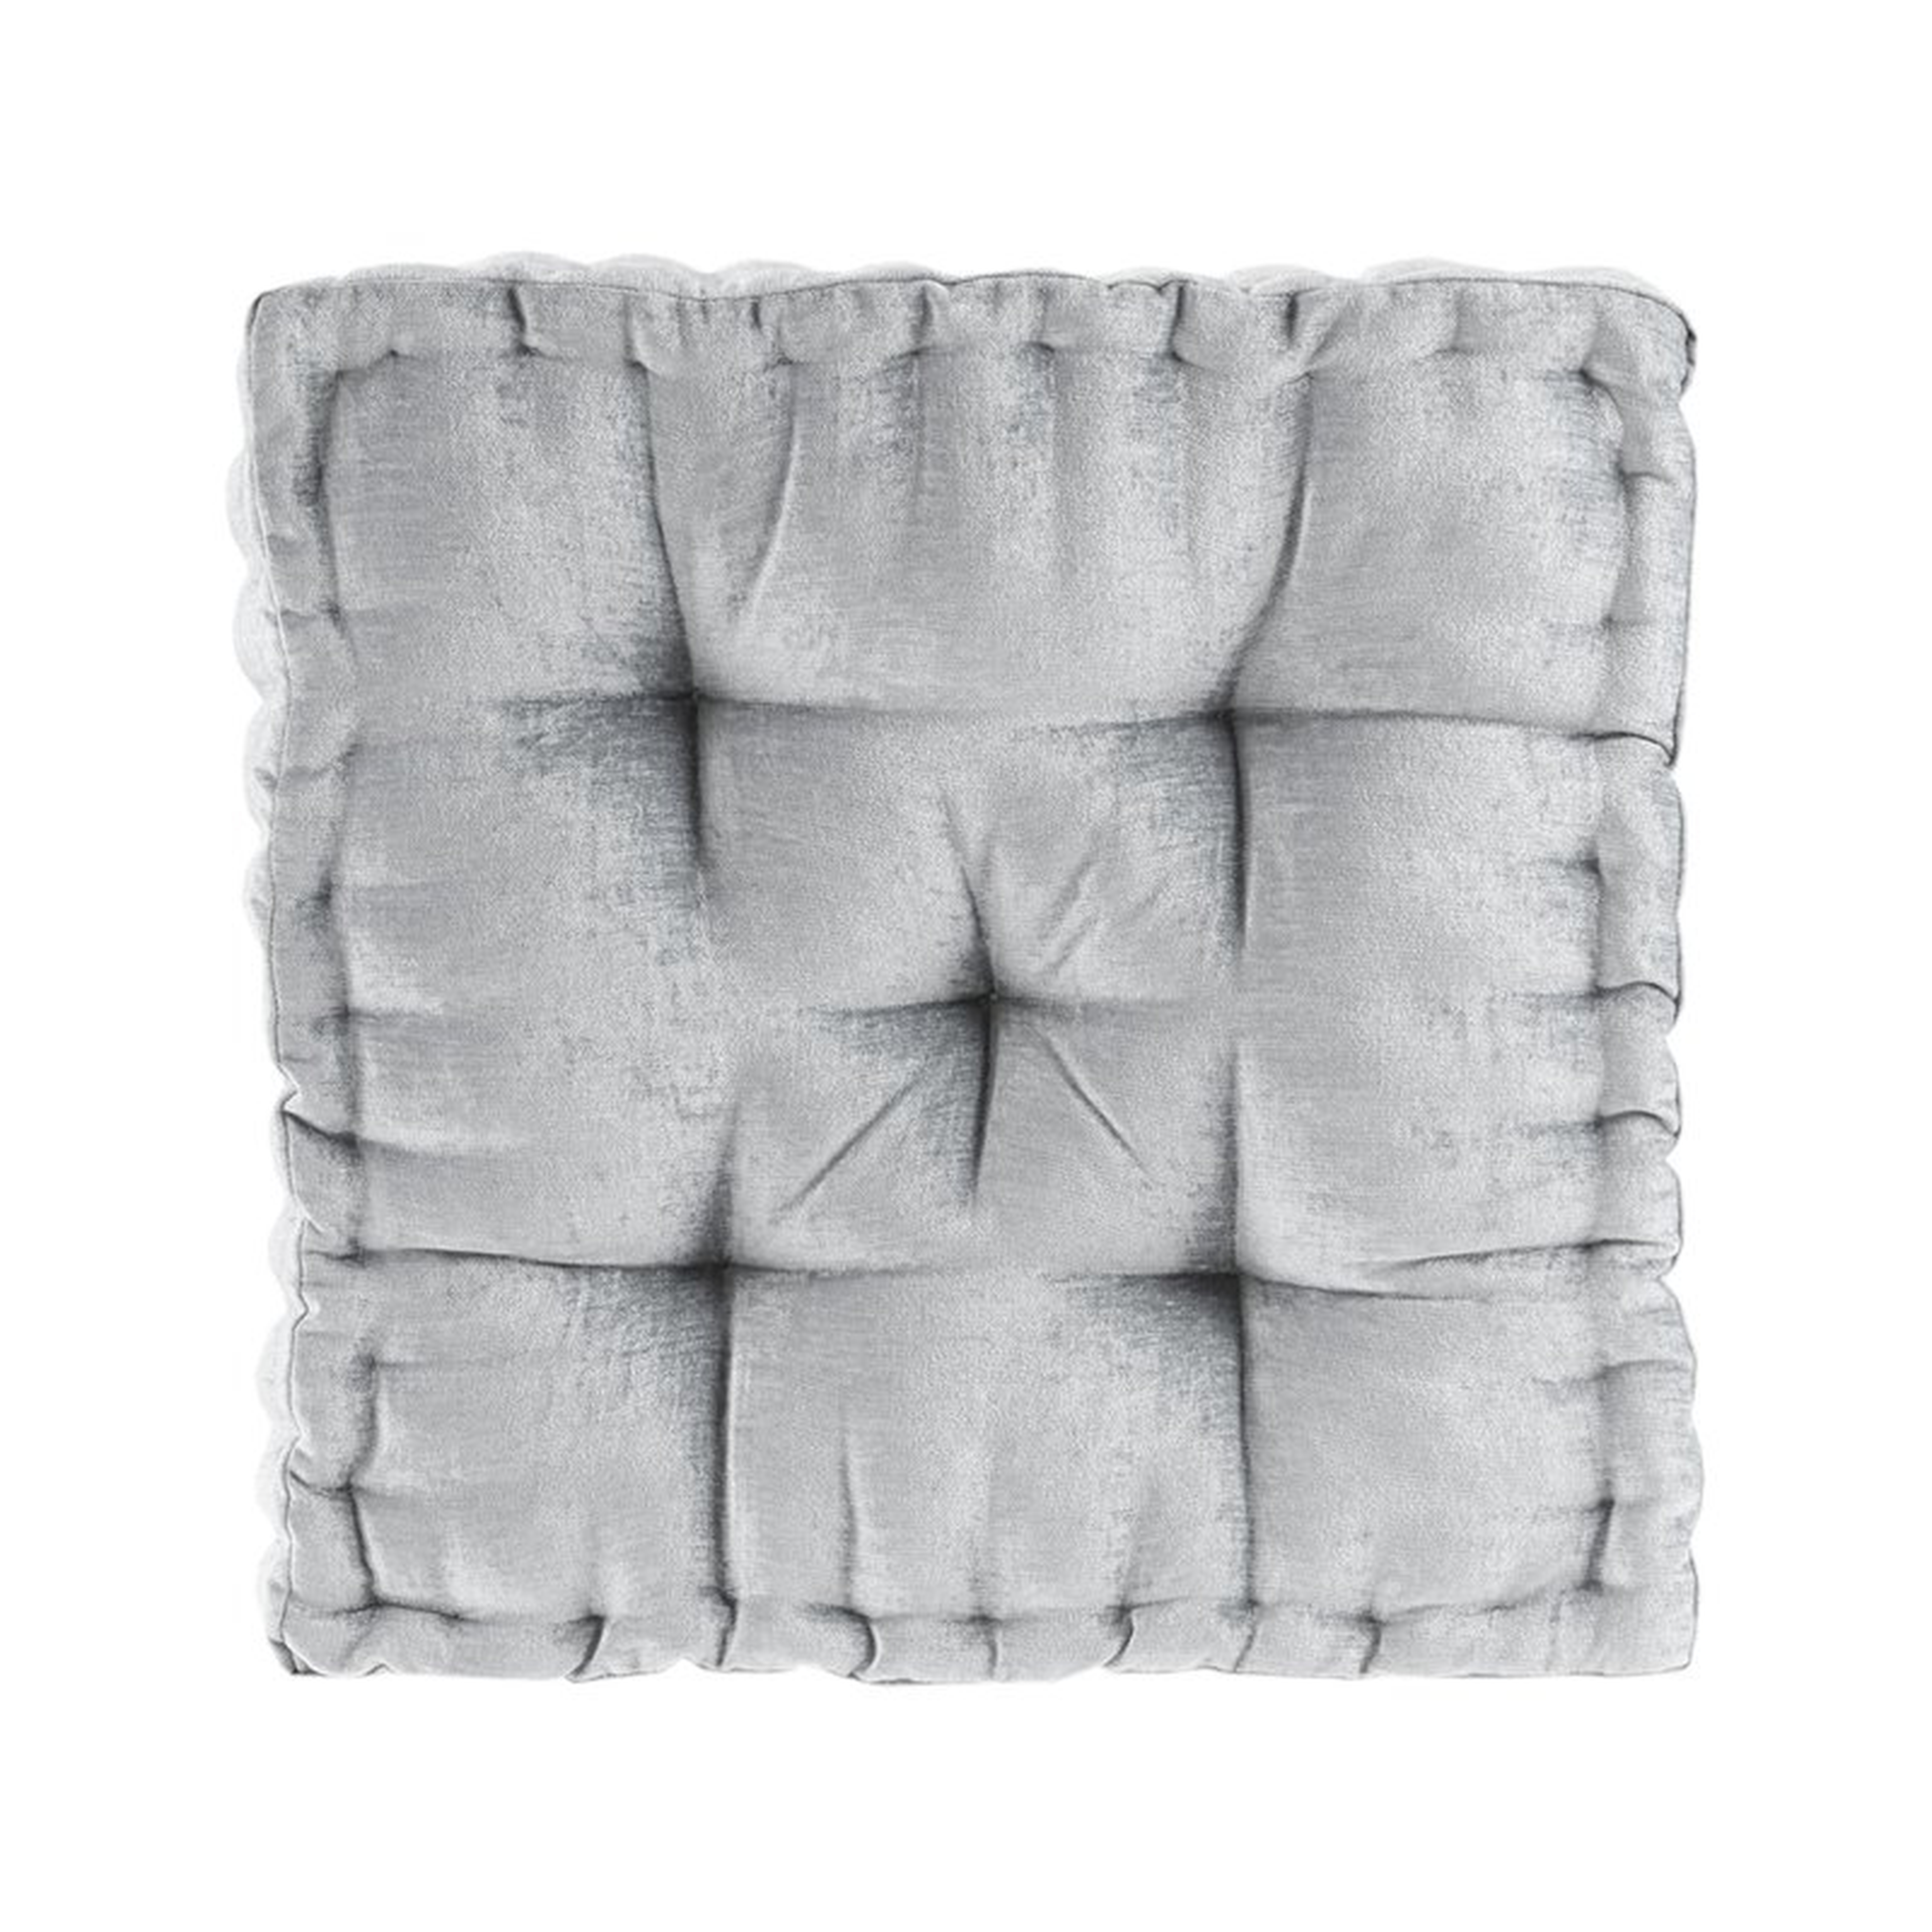 Cicero Square Floor Pillow - Gray - Wayfair